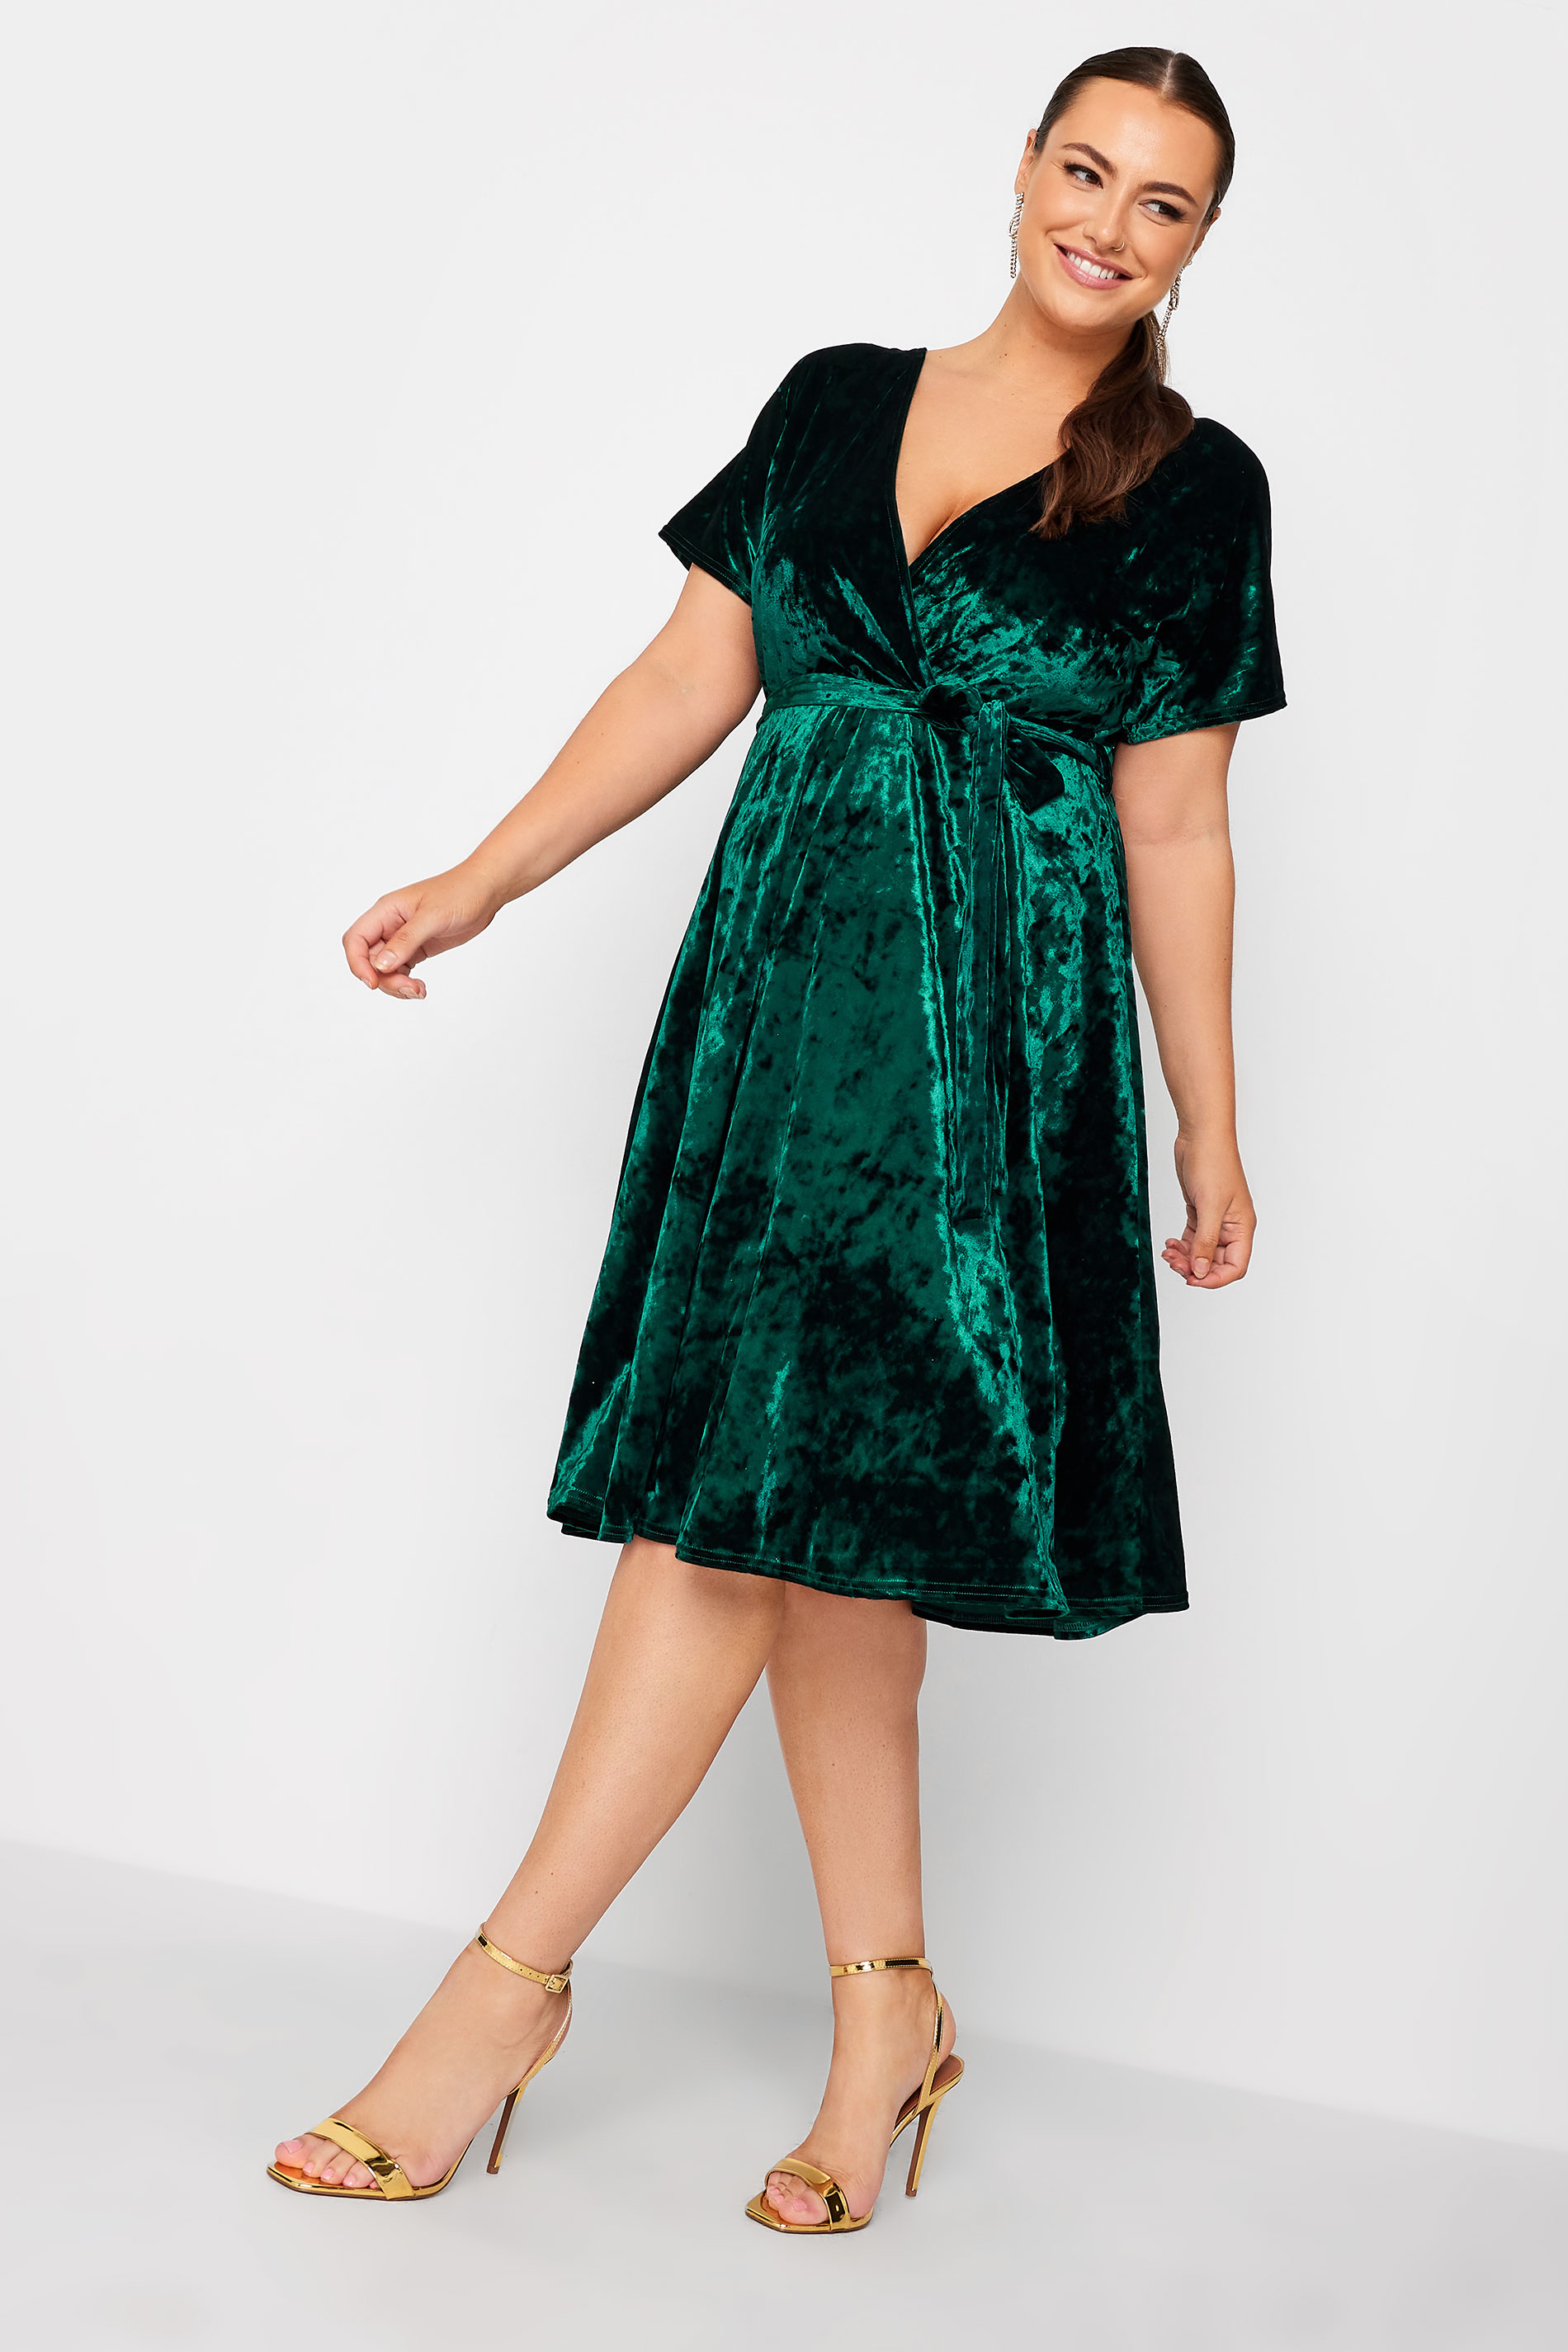 YOURS LONDON Plus Size Emerald Green Velvet Wrap Skater Dress | Yours Clothing 2